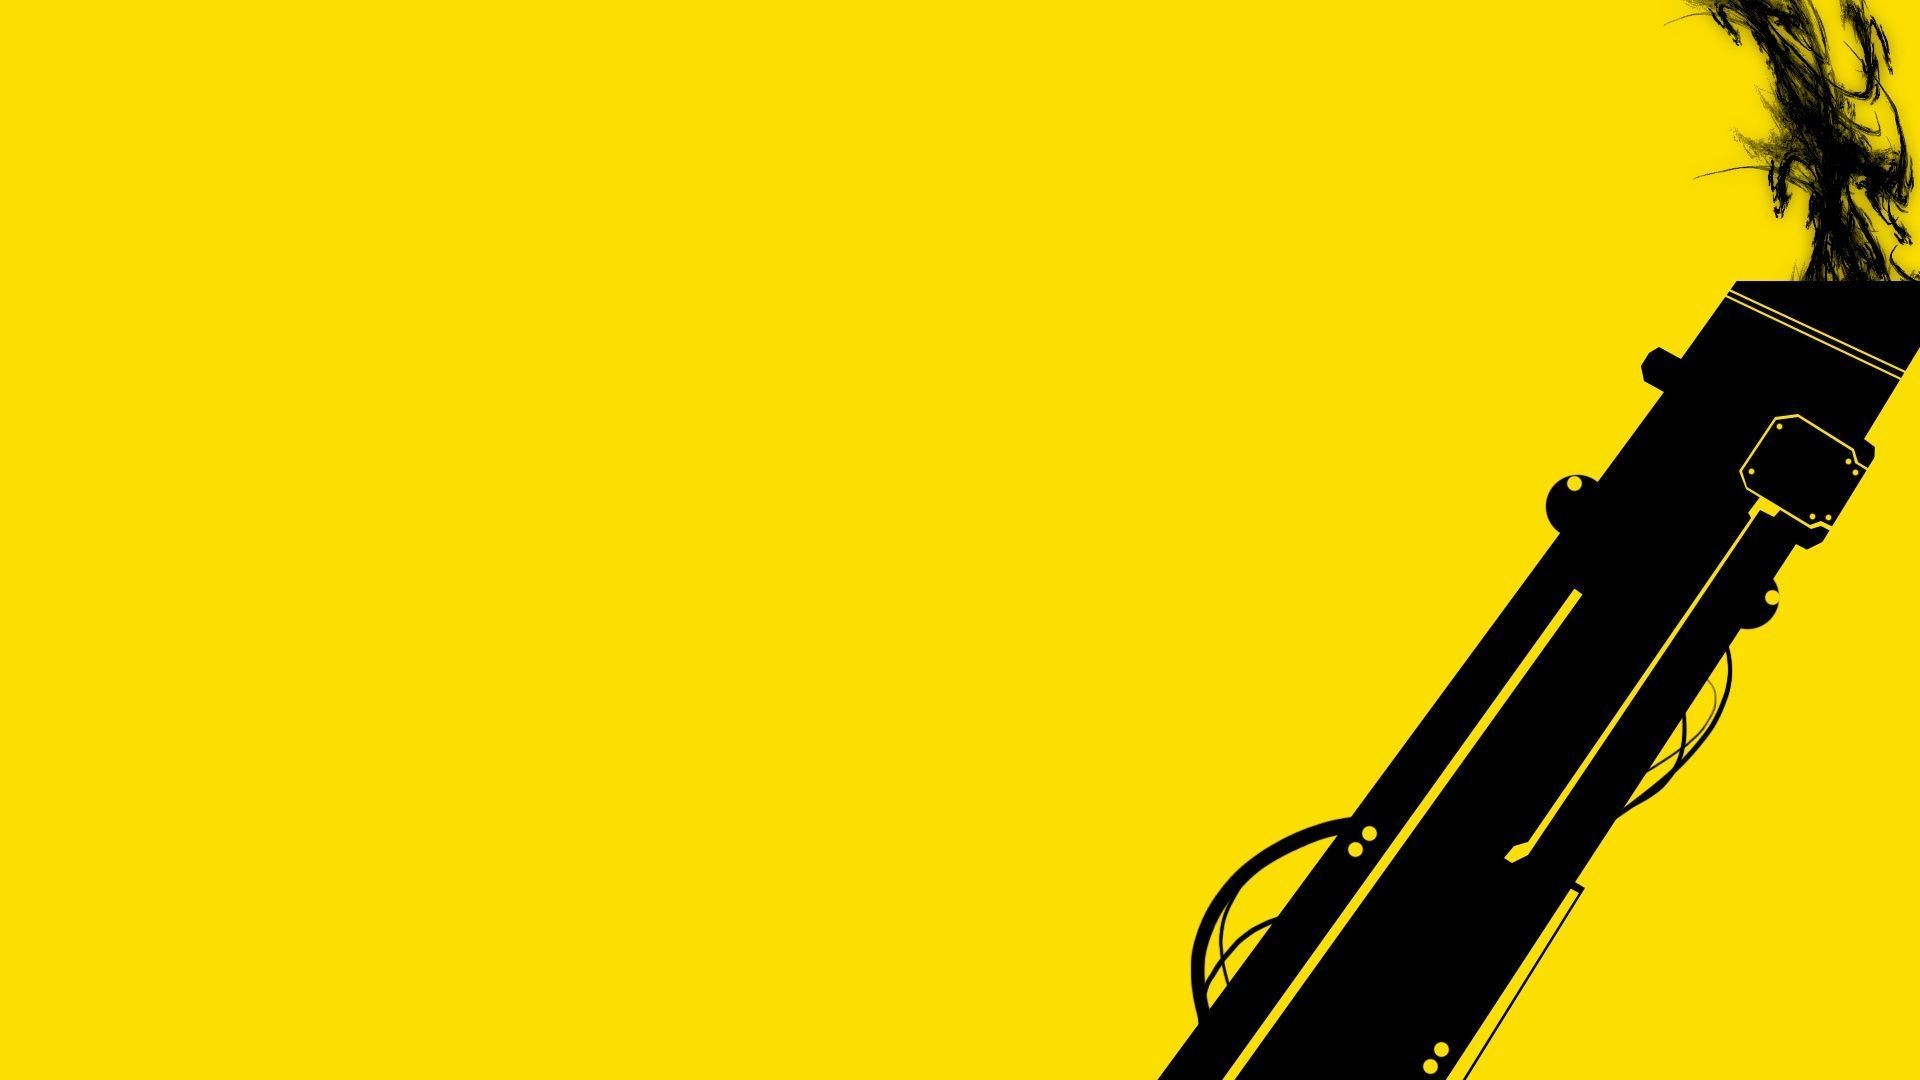 1920x1080, Black Gun On Yellow Background Wallpaper - Yellow Backgrounds For Desktop - HD Wallpaper 